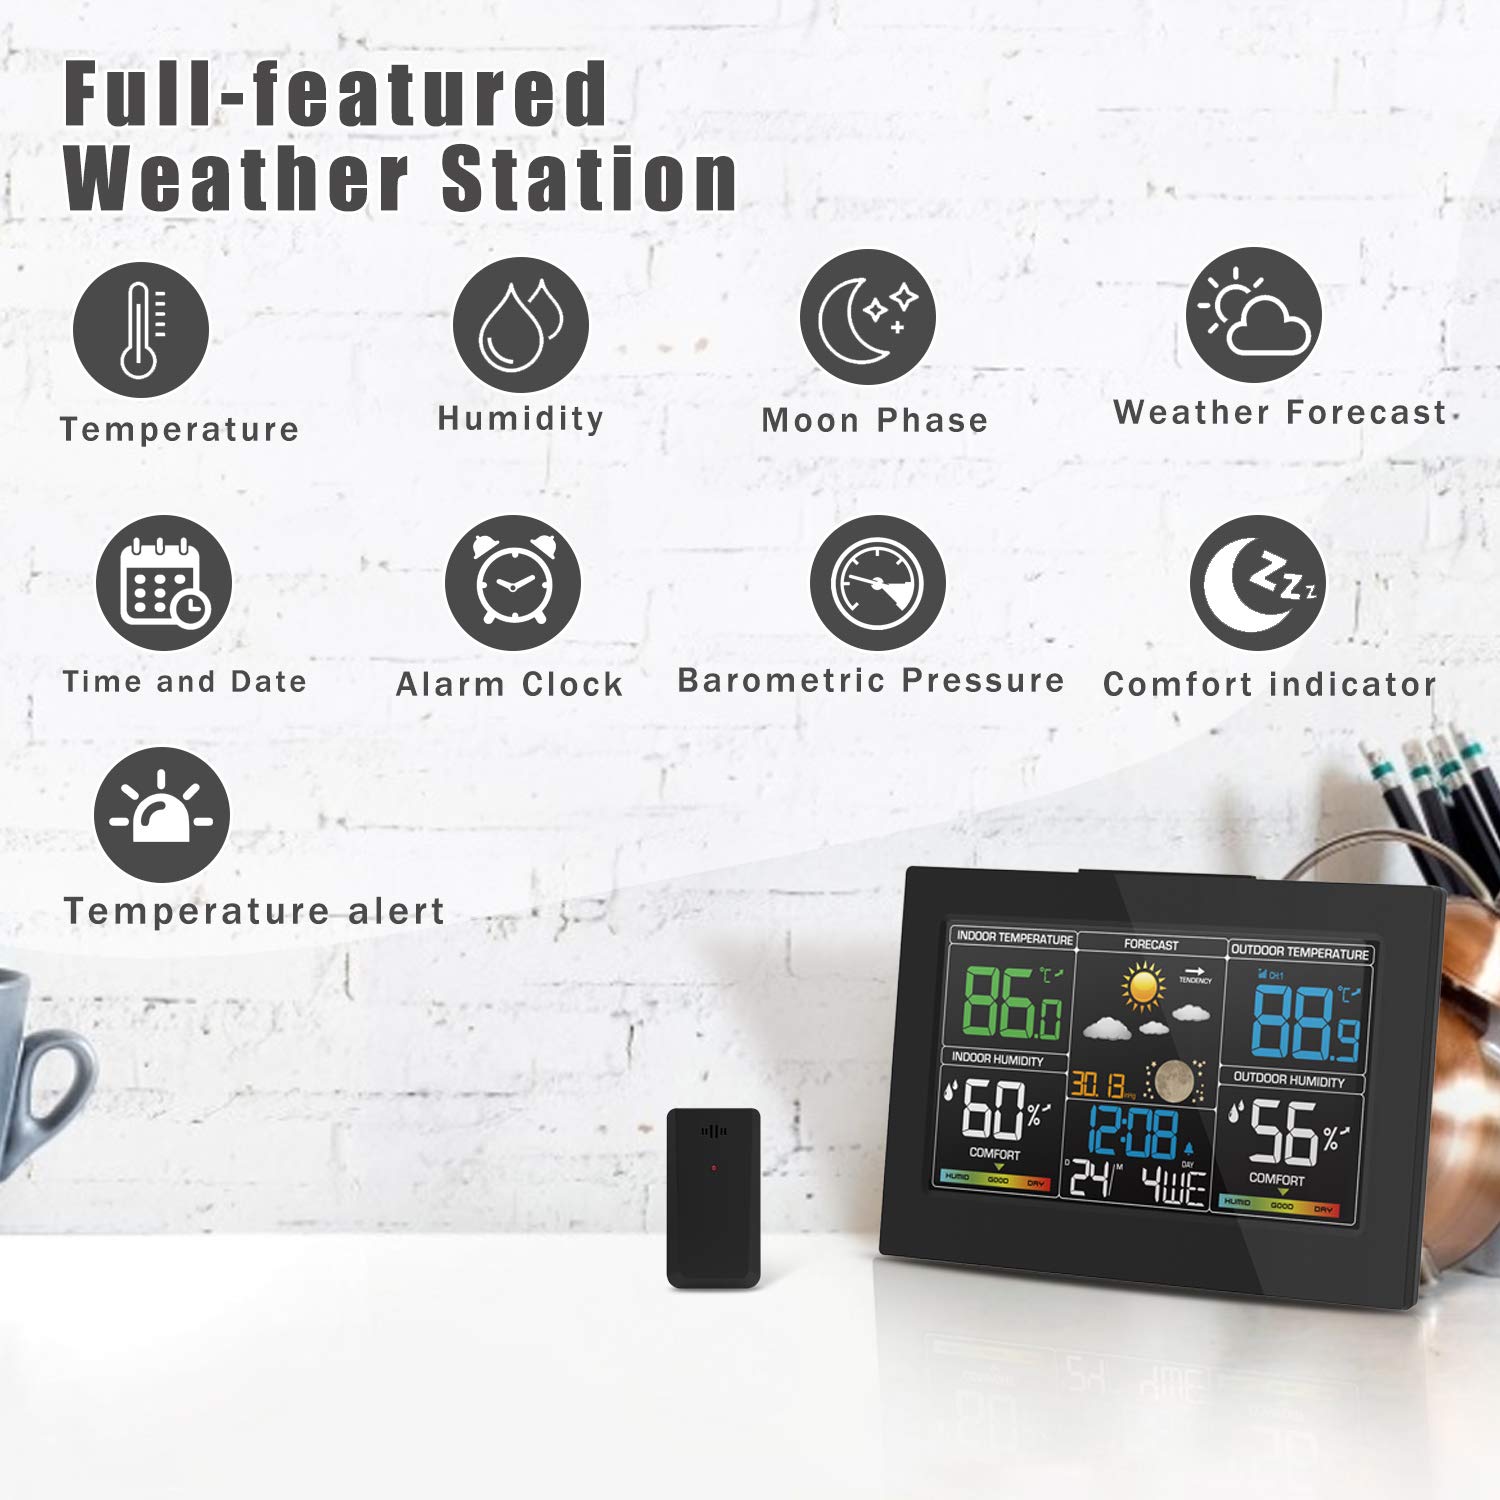 GEEVON Indoor Outdoor Thermometer Wireless Digital Hygrometer Temperature  Gauge，200ft/60m Range Temperature Humidity Sensor